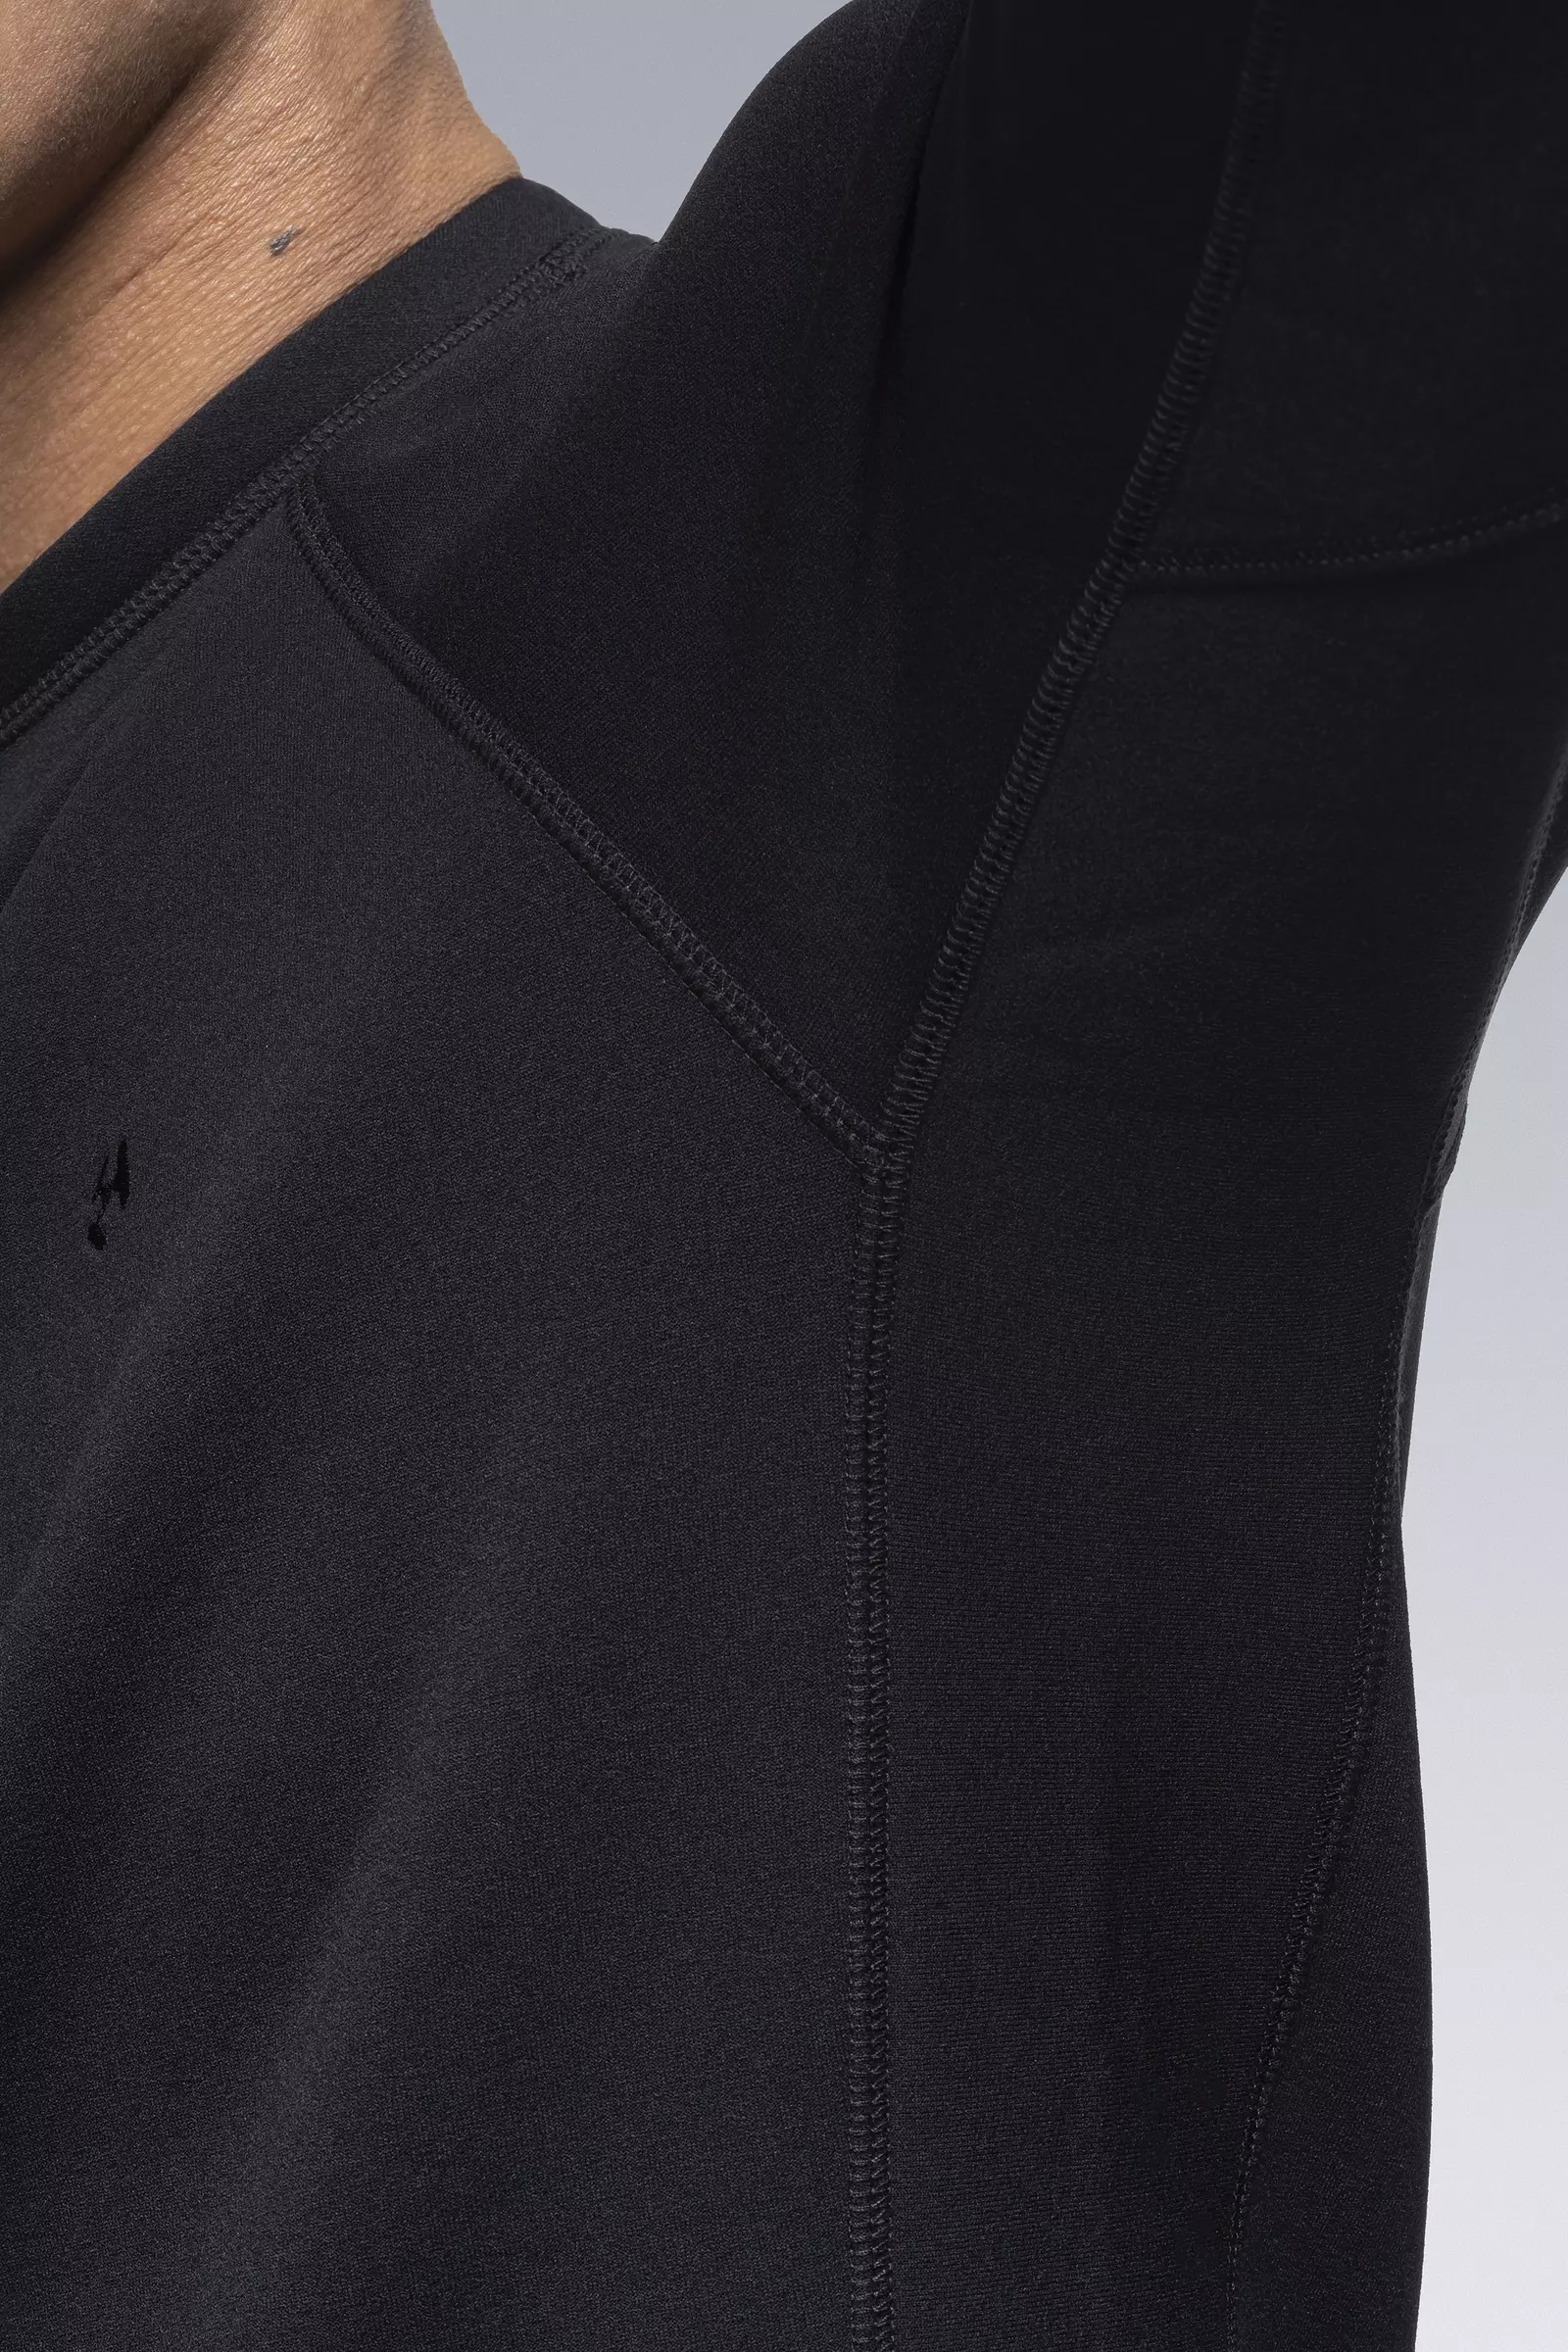 S27-PS Powerstretch® Longsleeve Shirt Black - 10